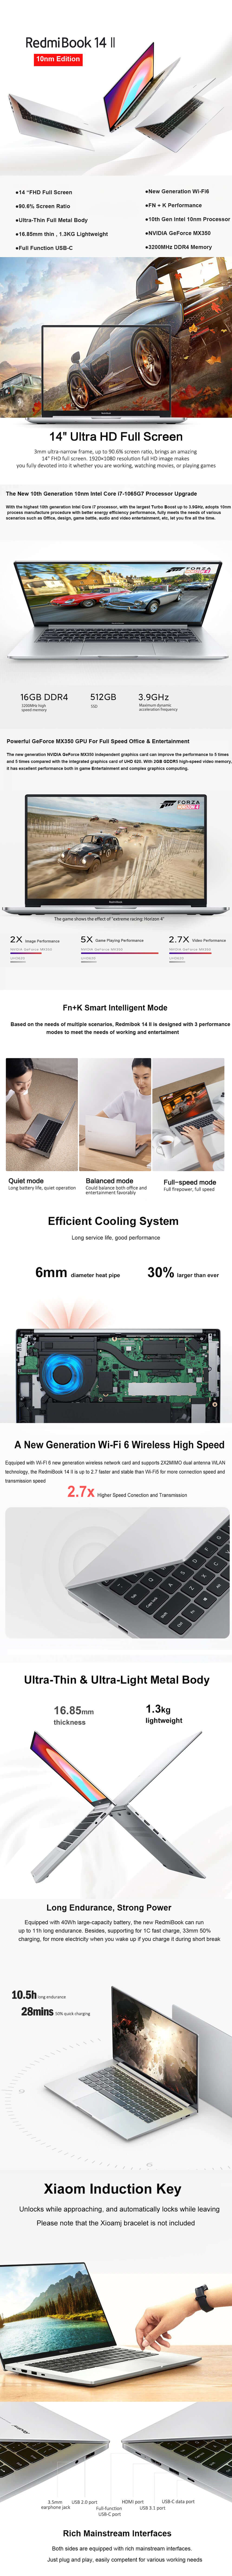 Xiaomi RedmiBook 14 Laptop II 14 inch Intel i7-1065G7 NVIDIA GeForce MX350 16G DDR4 512GB SSD 91% Ratio 100%sRGB WiFi 6 Full-featured Type-C Notebook 5